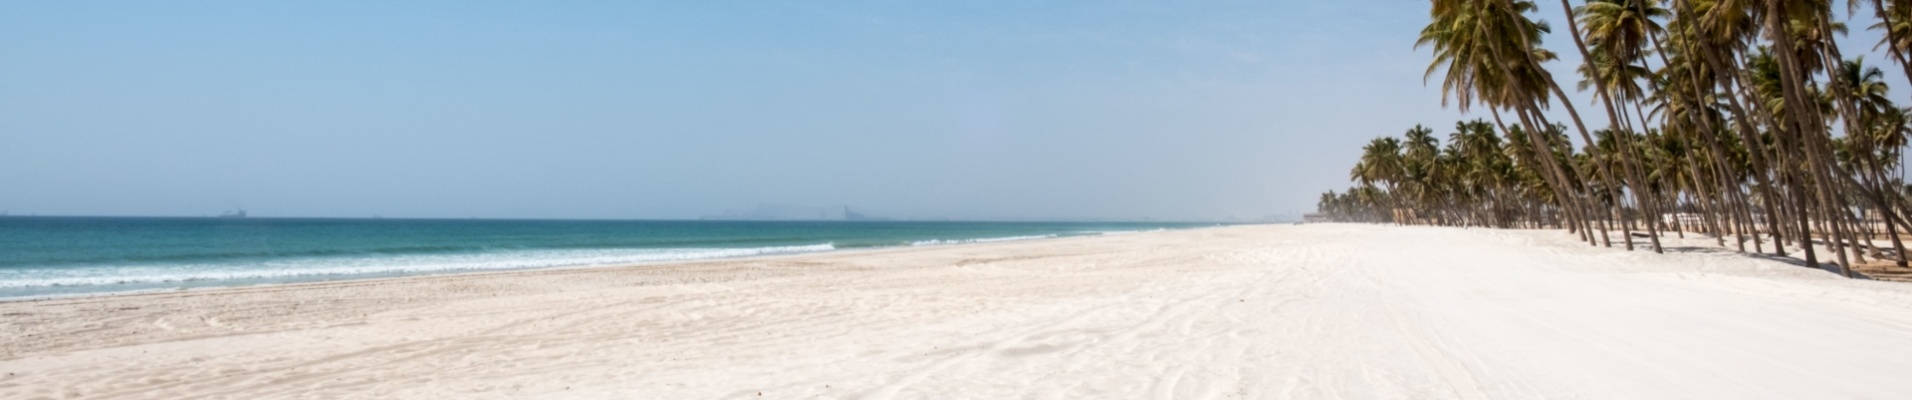 plage de sable blanc sud oman